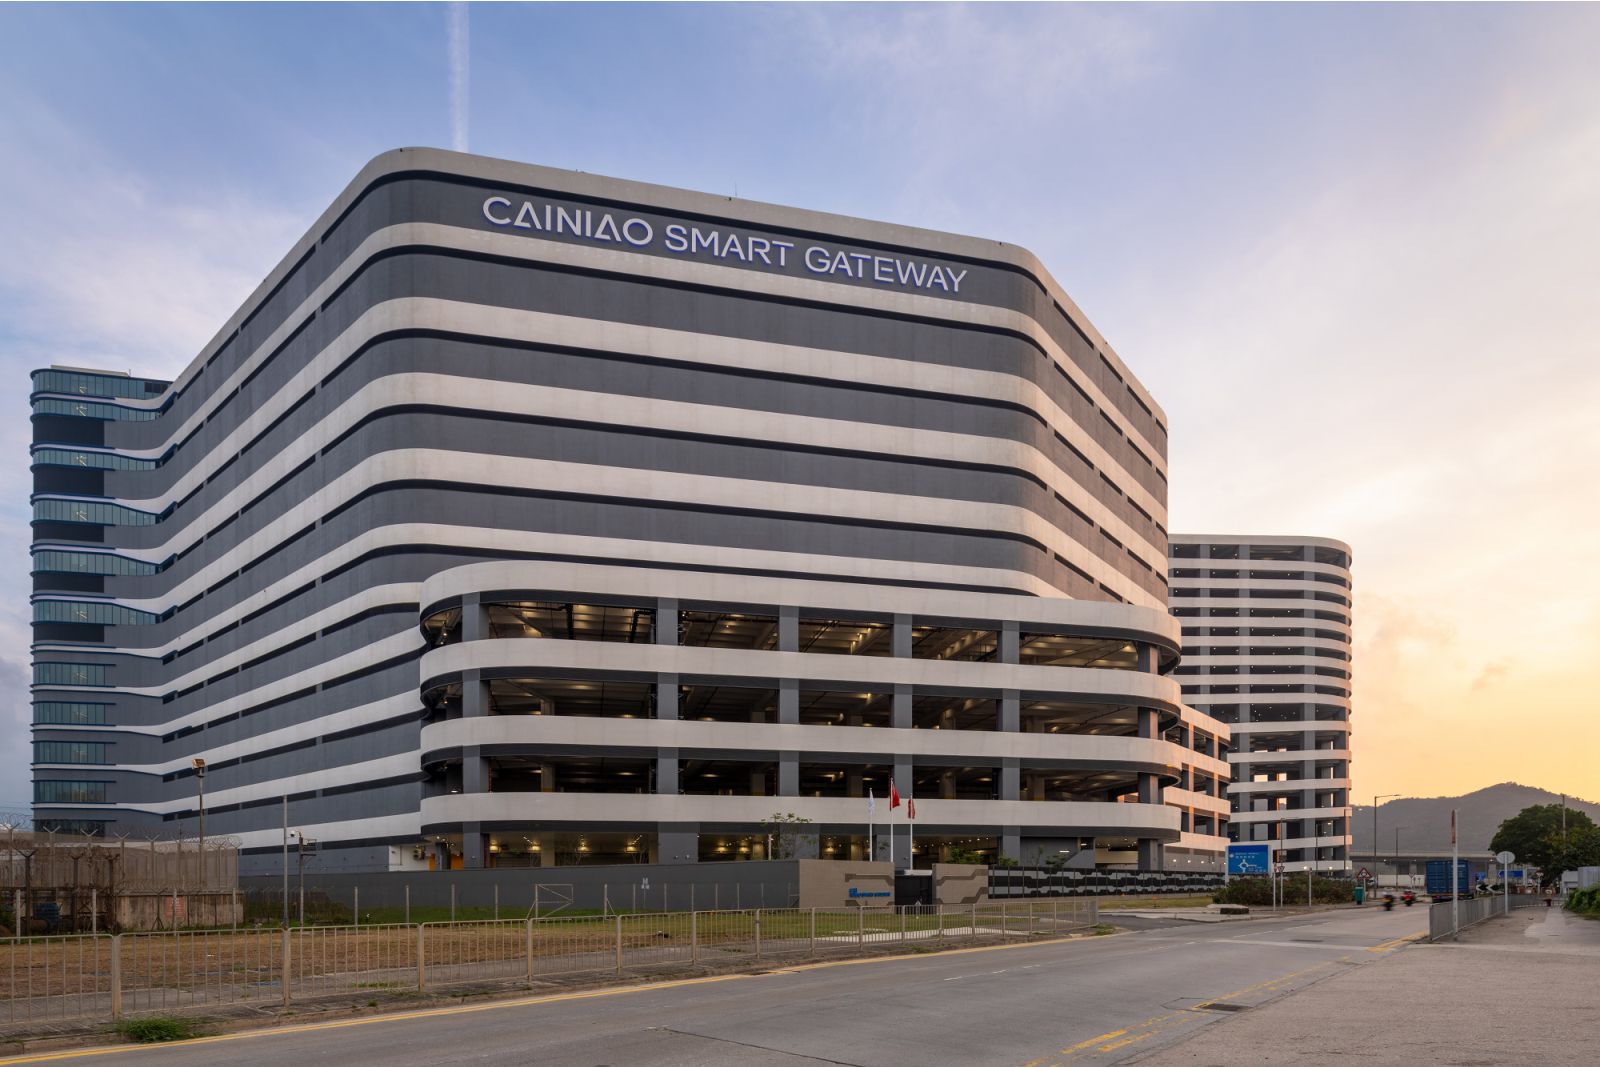 CaiNiao Smart Gateway